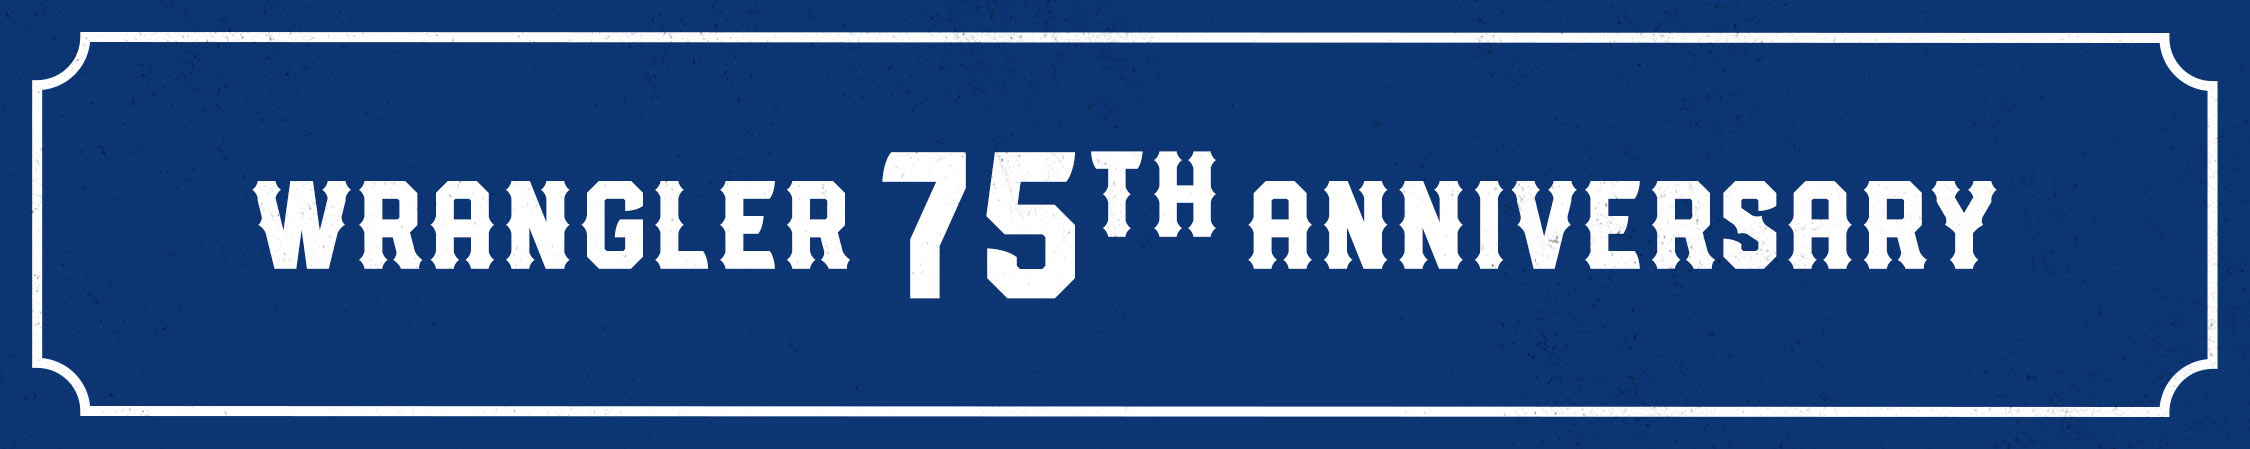 happy birthday wrangler 75th anniversary banner